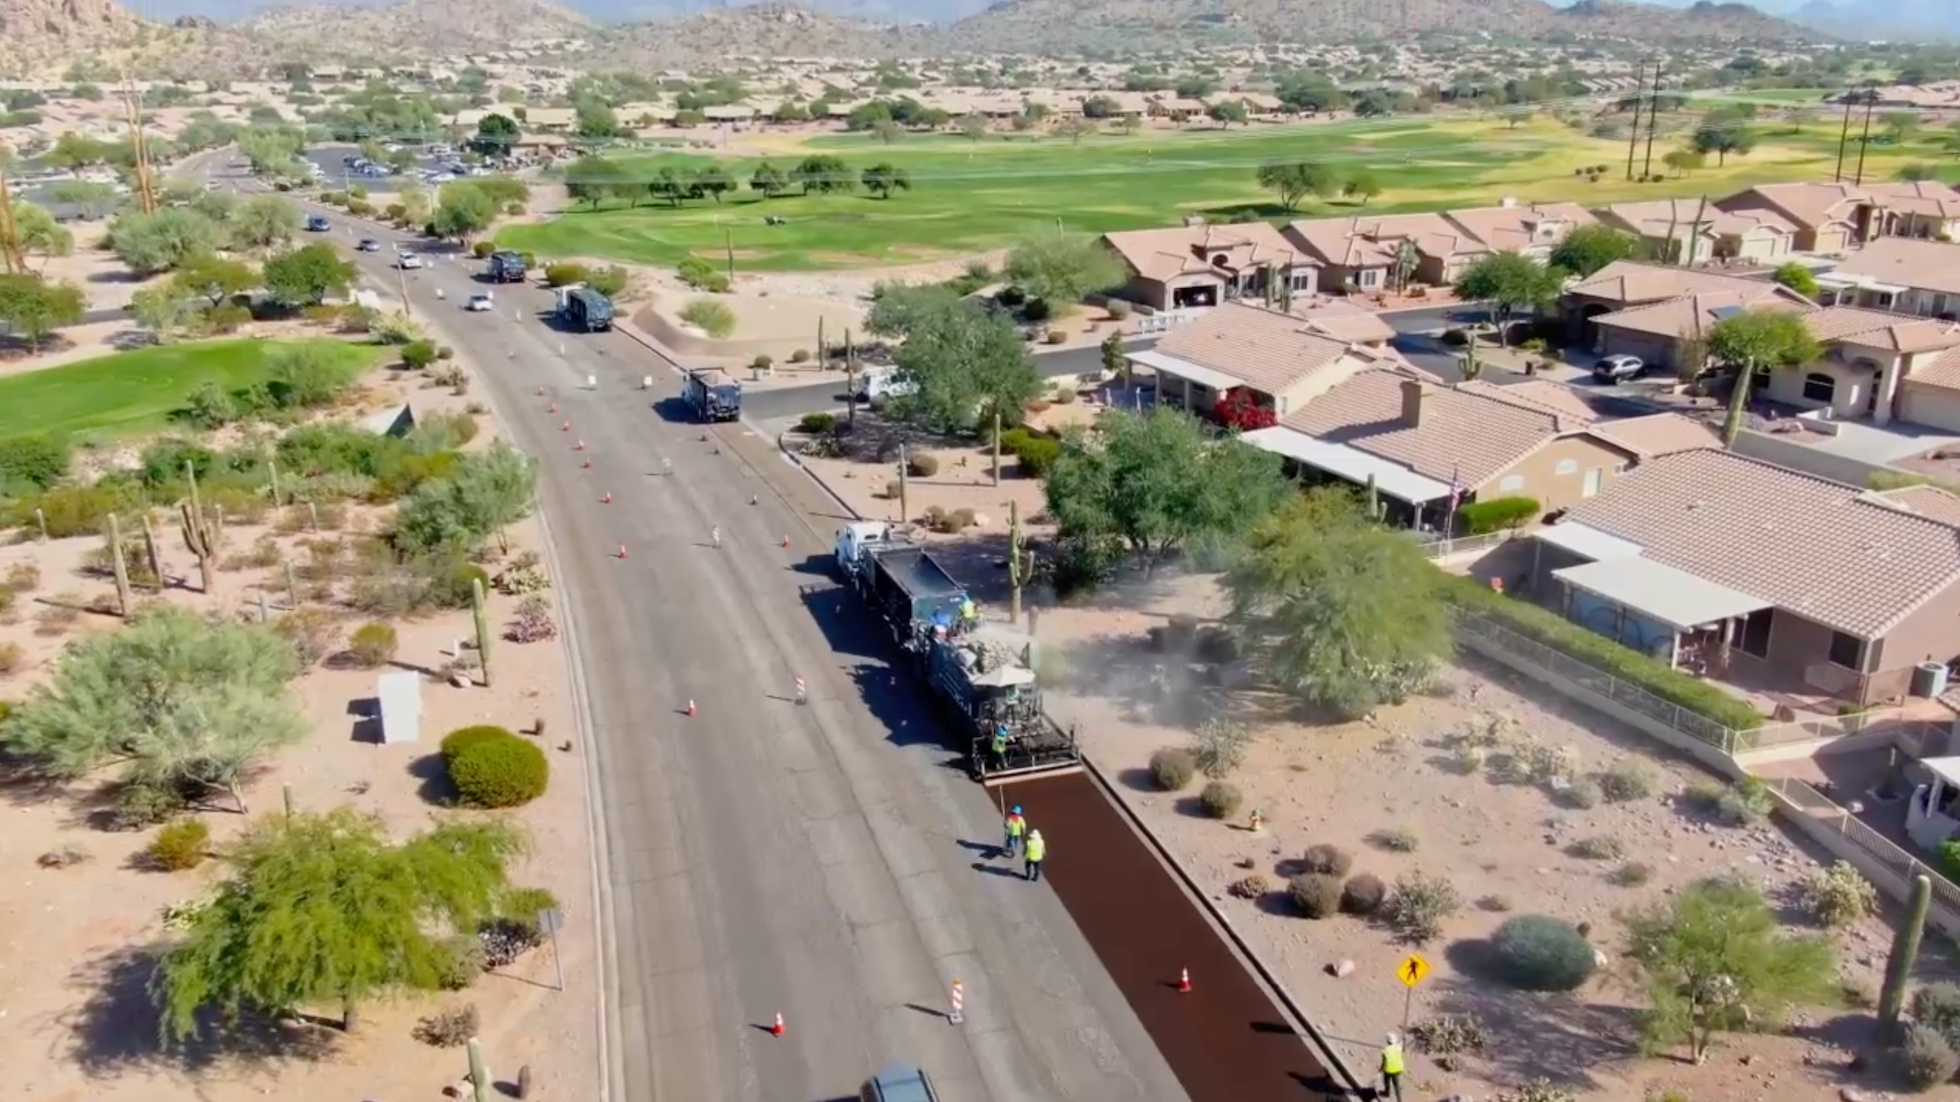 An asphalt-laying machine is paving a road along an Arizona neighborhood roadway.